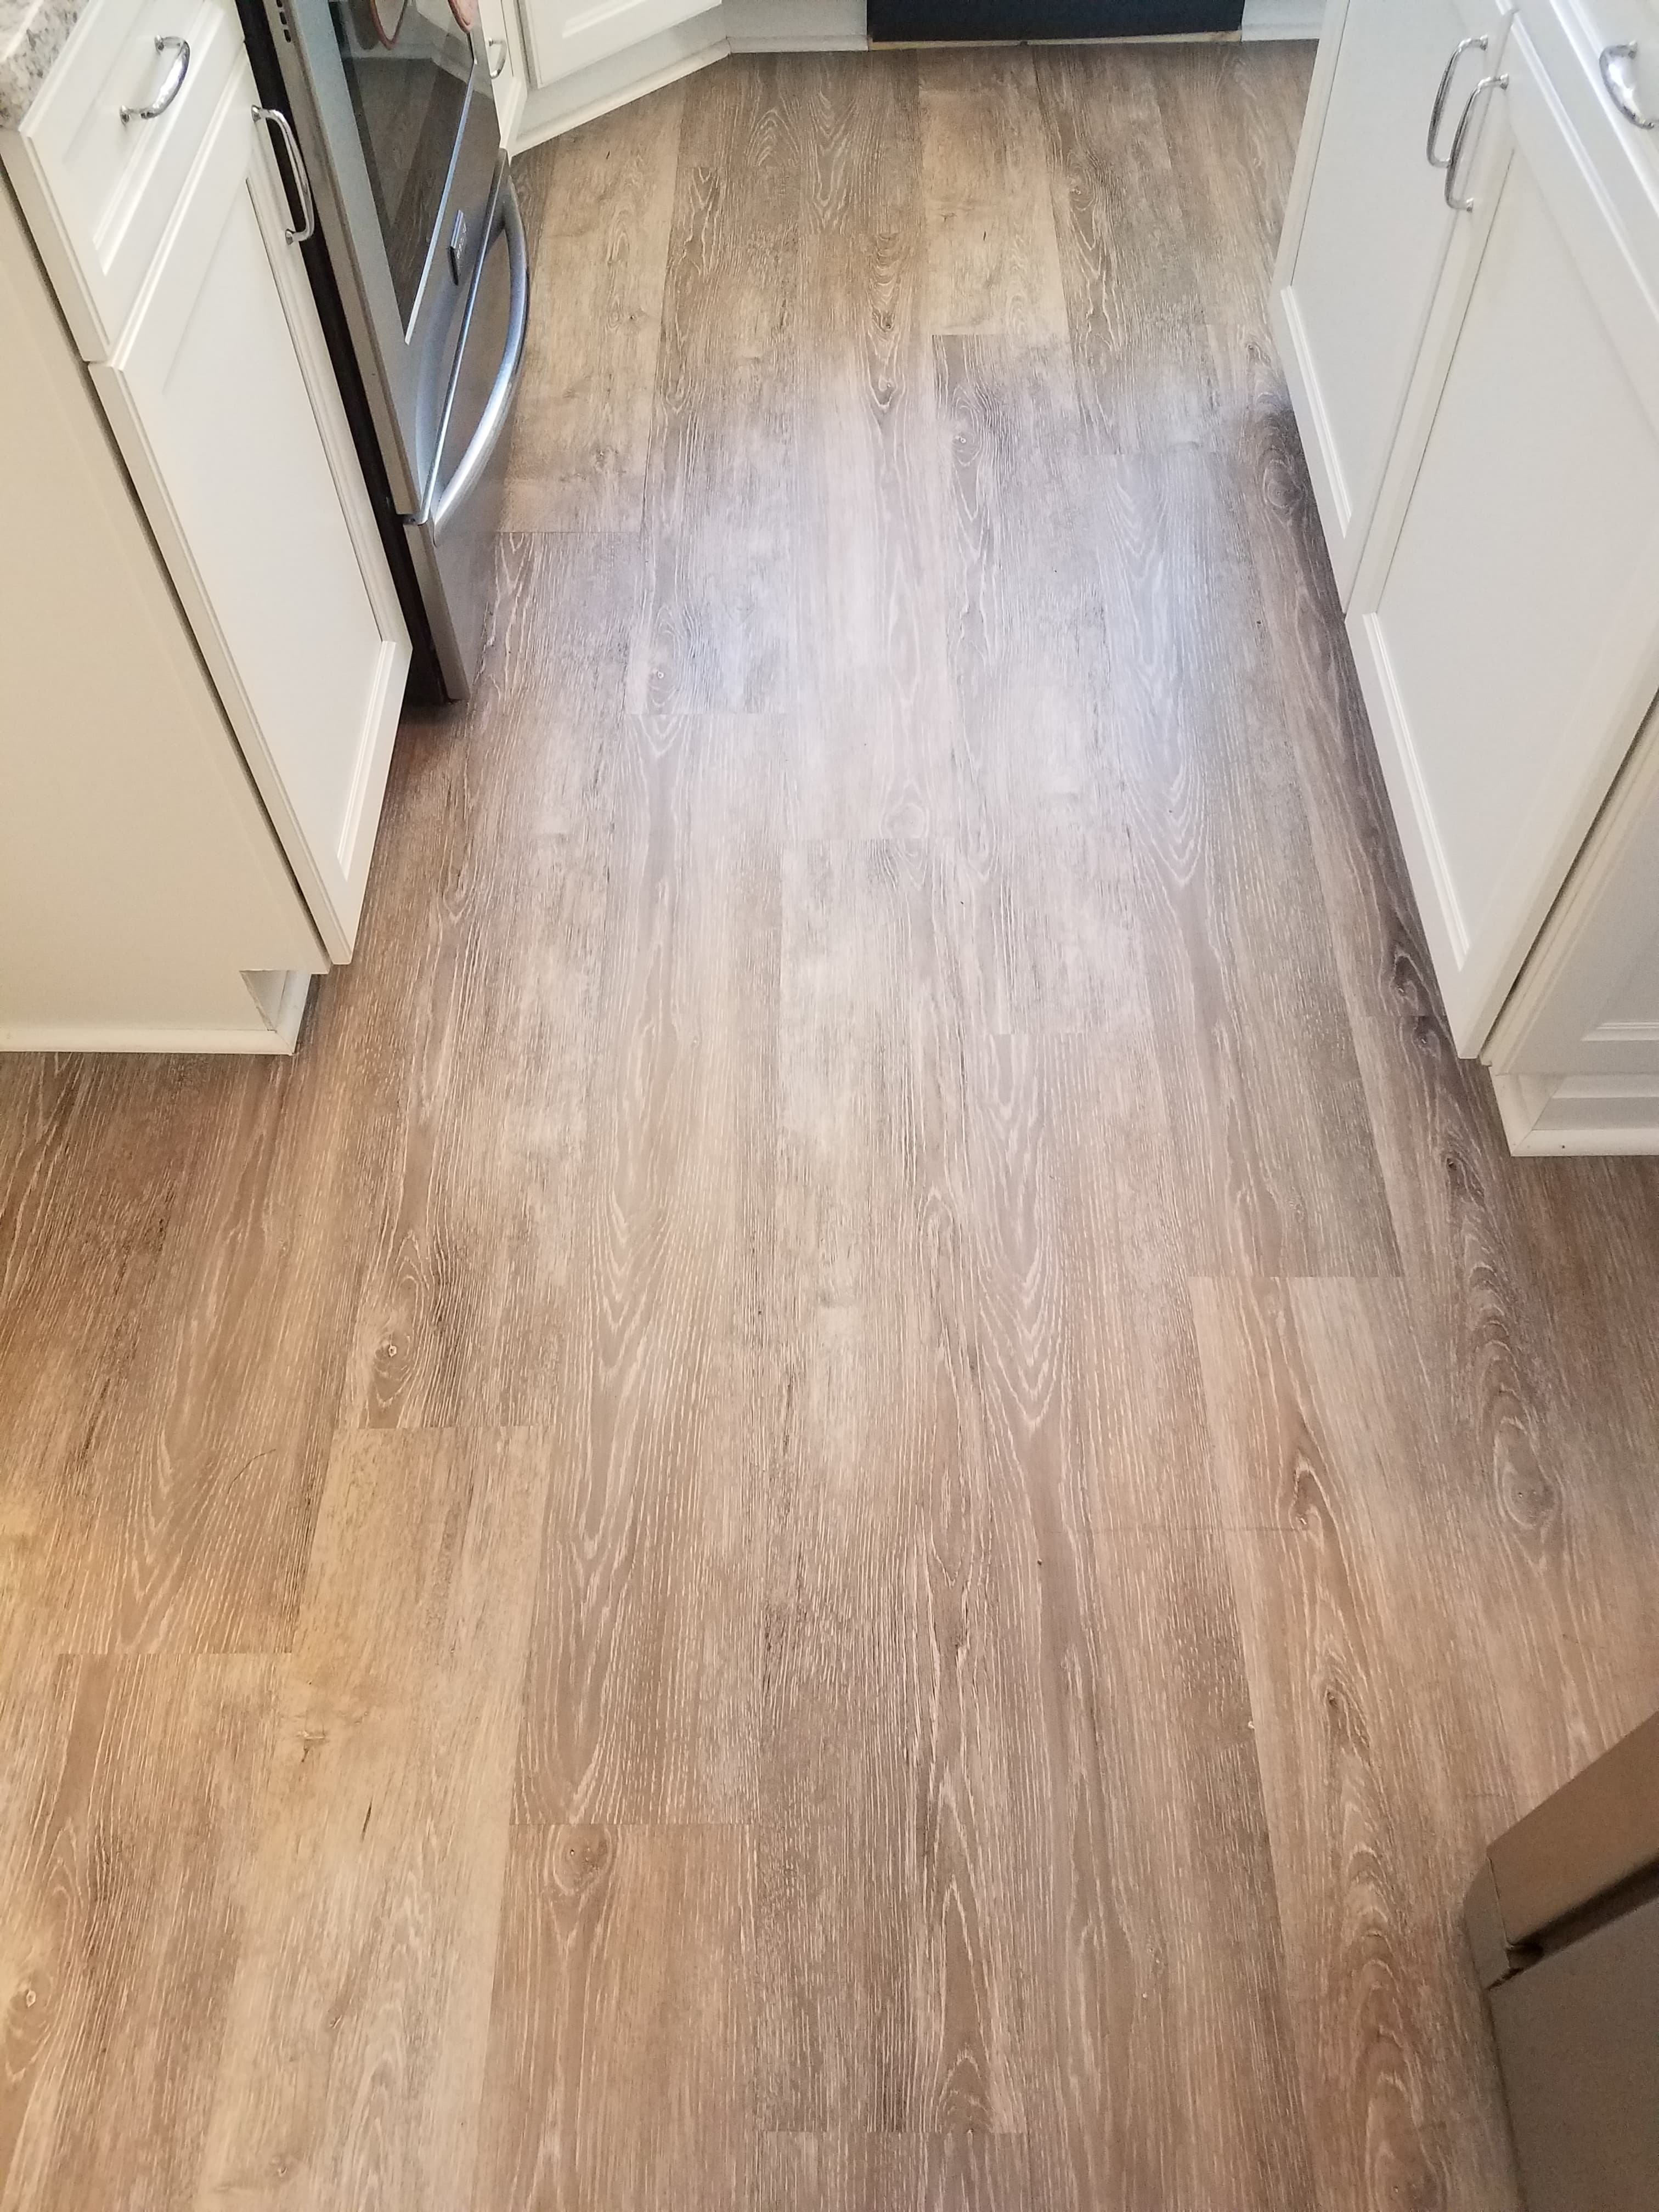 Kitchen waterproof flooring alternate view